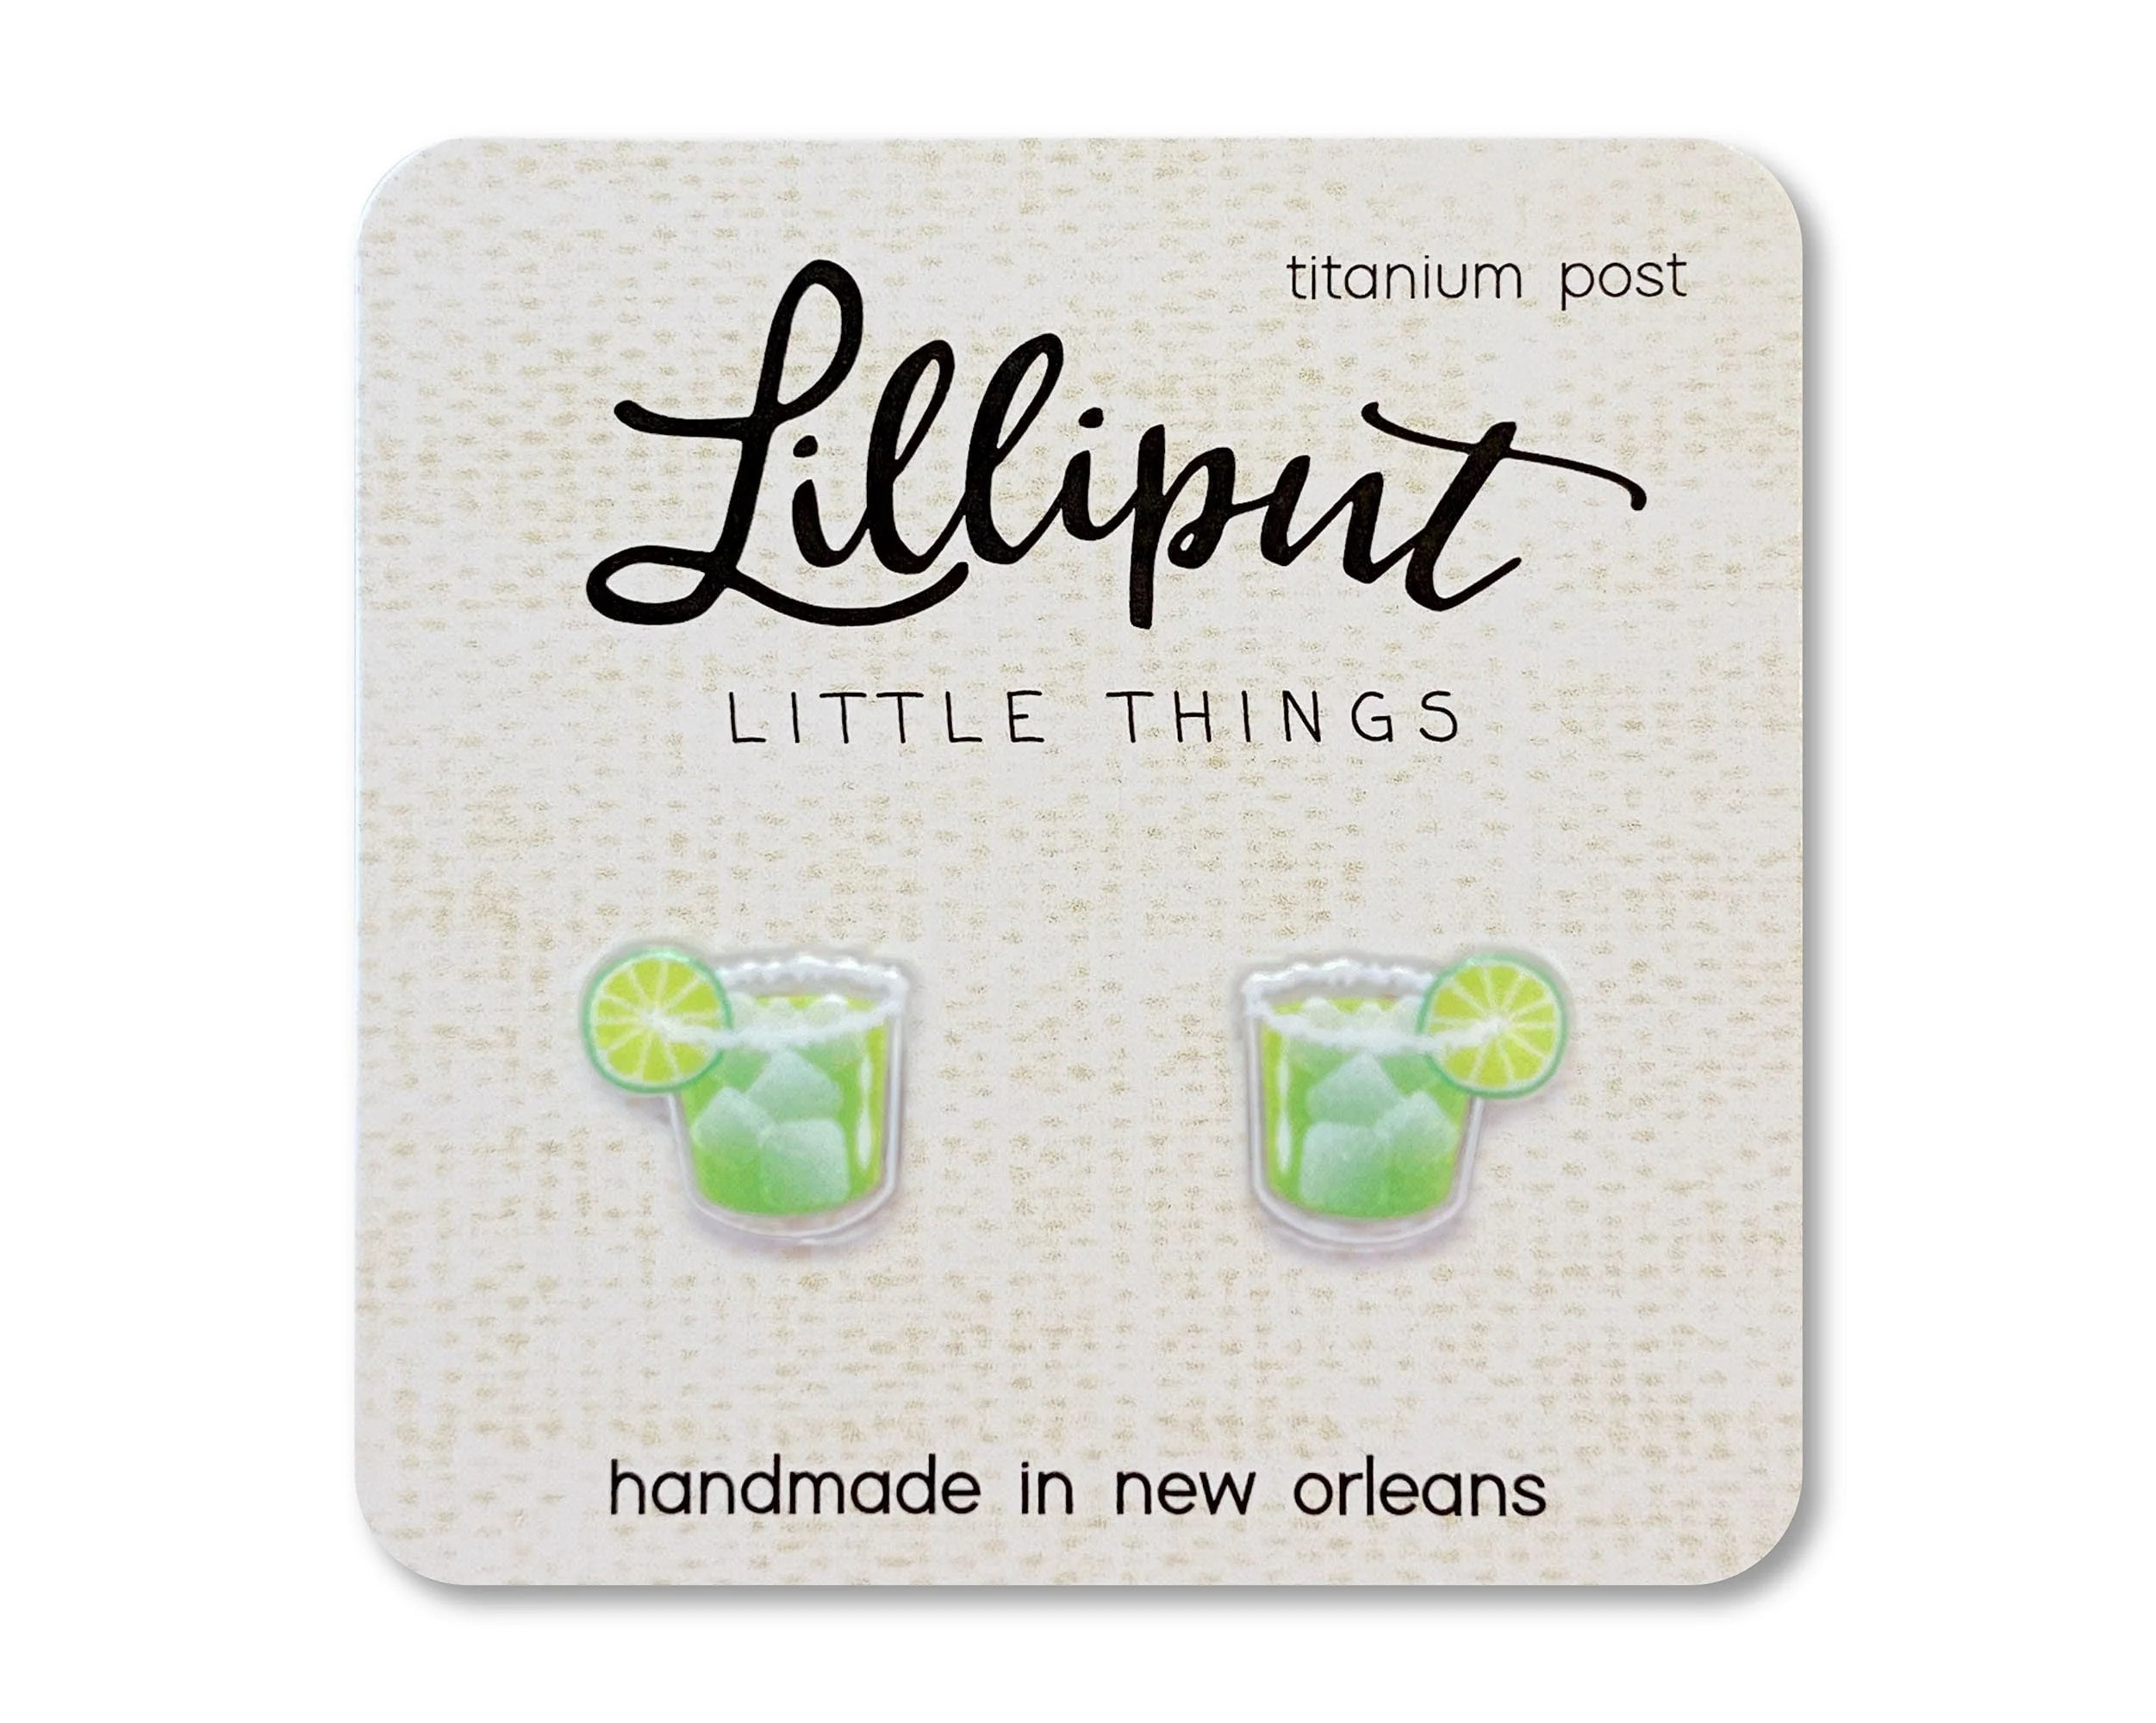 Lilliput "Little Things" Stud Earrings